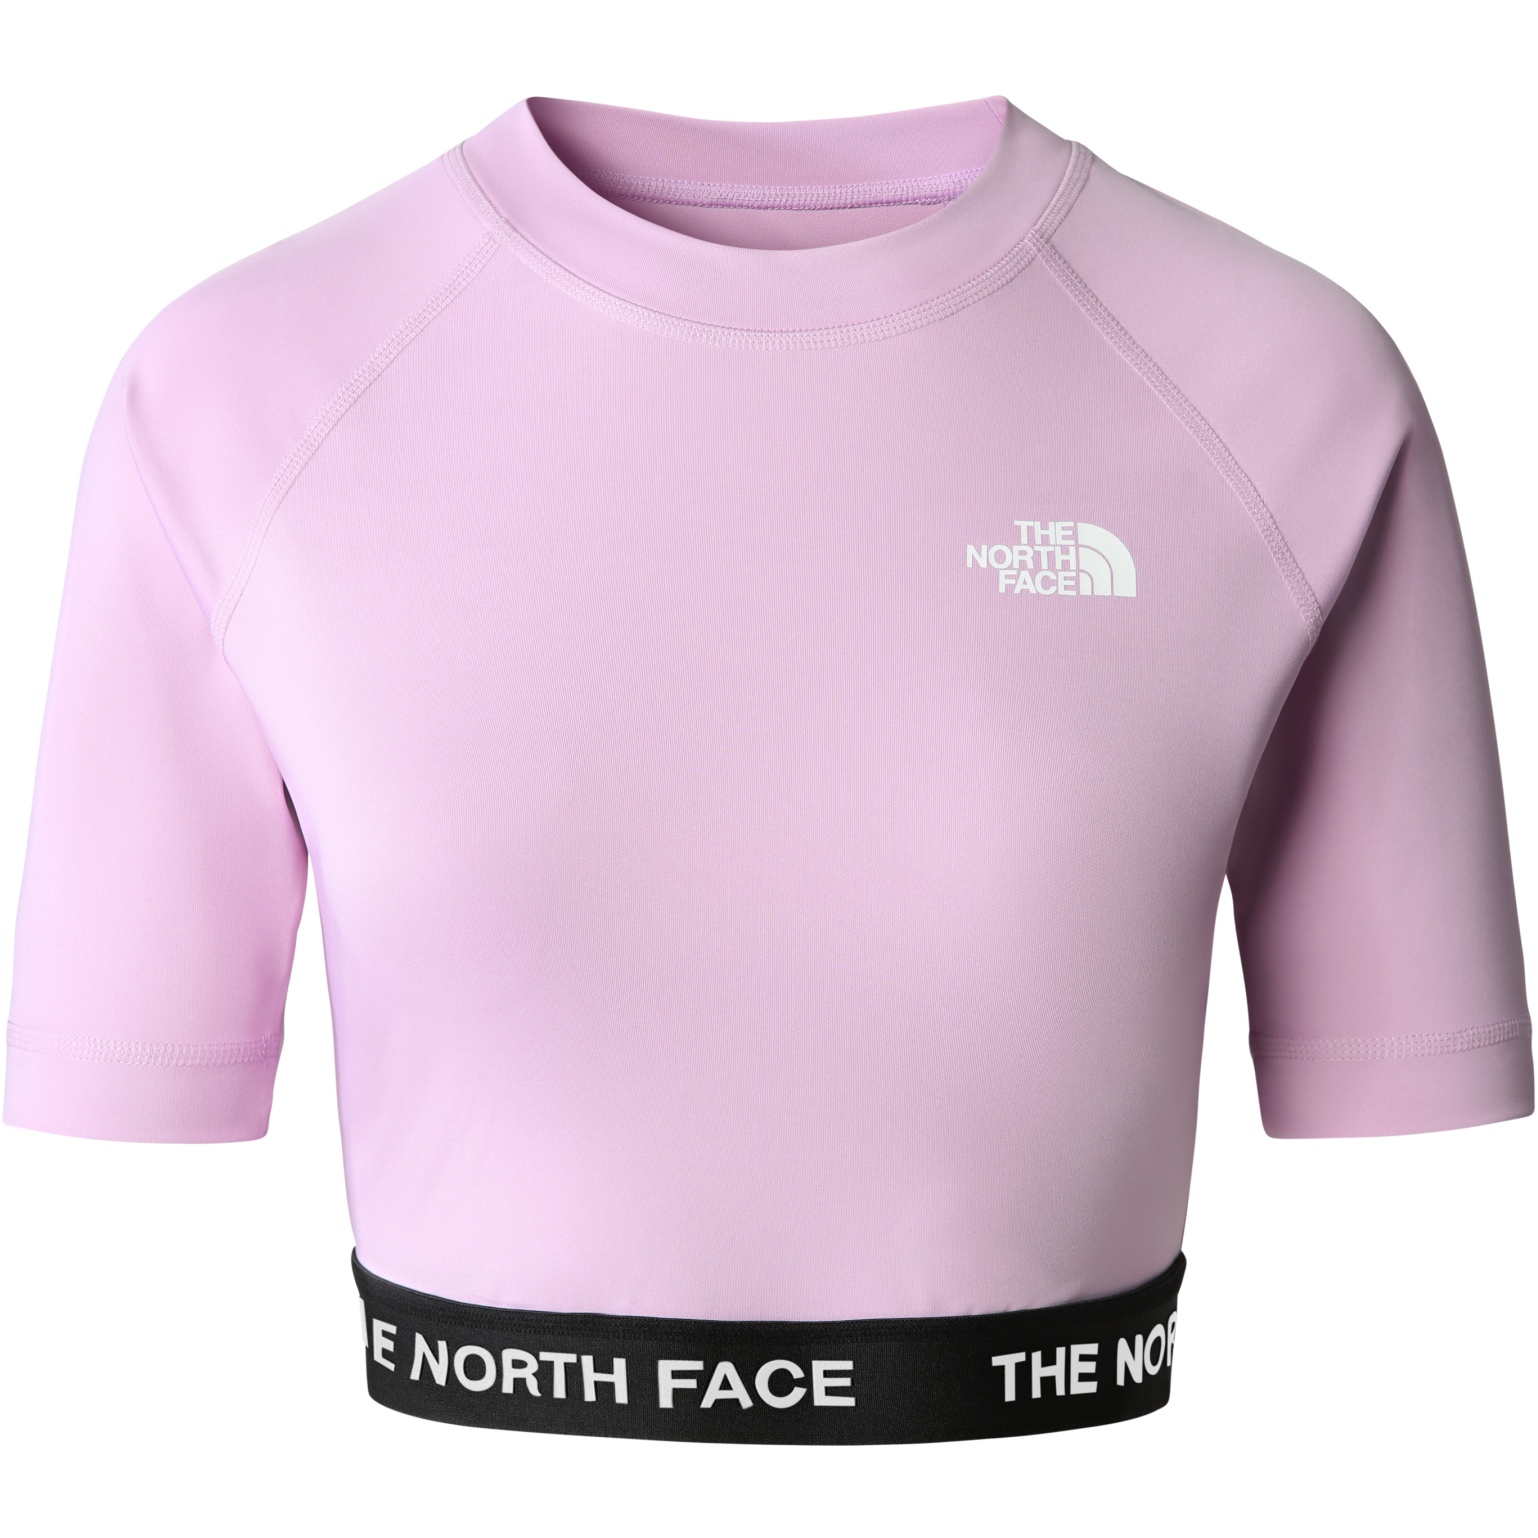 Produktbild von The North Face Performance kurzgeschnittenes Kurzarm-Shirt Damen - Lupine